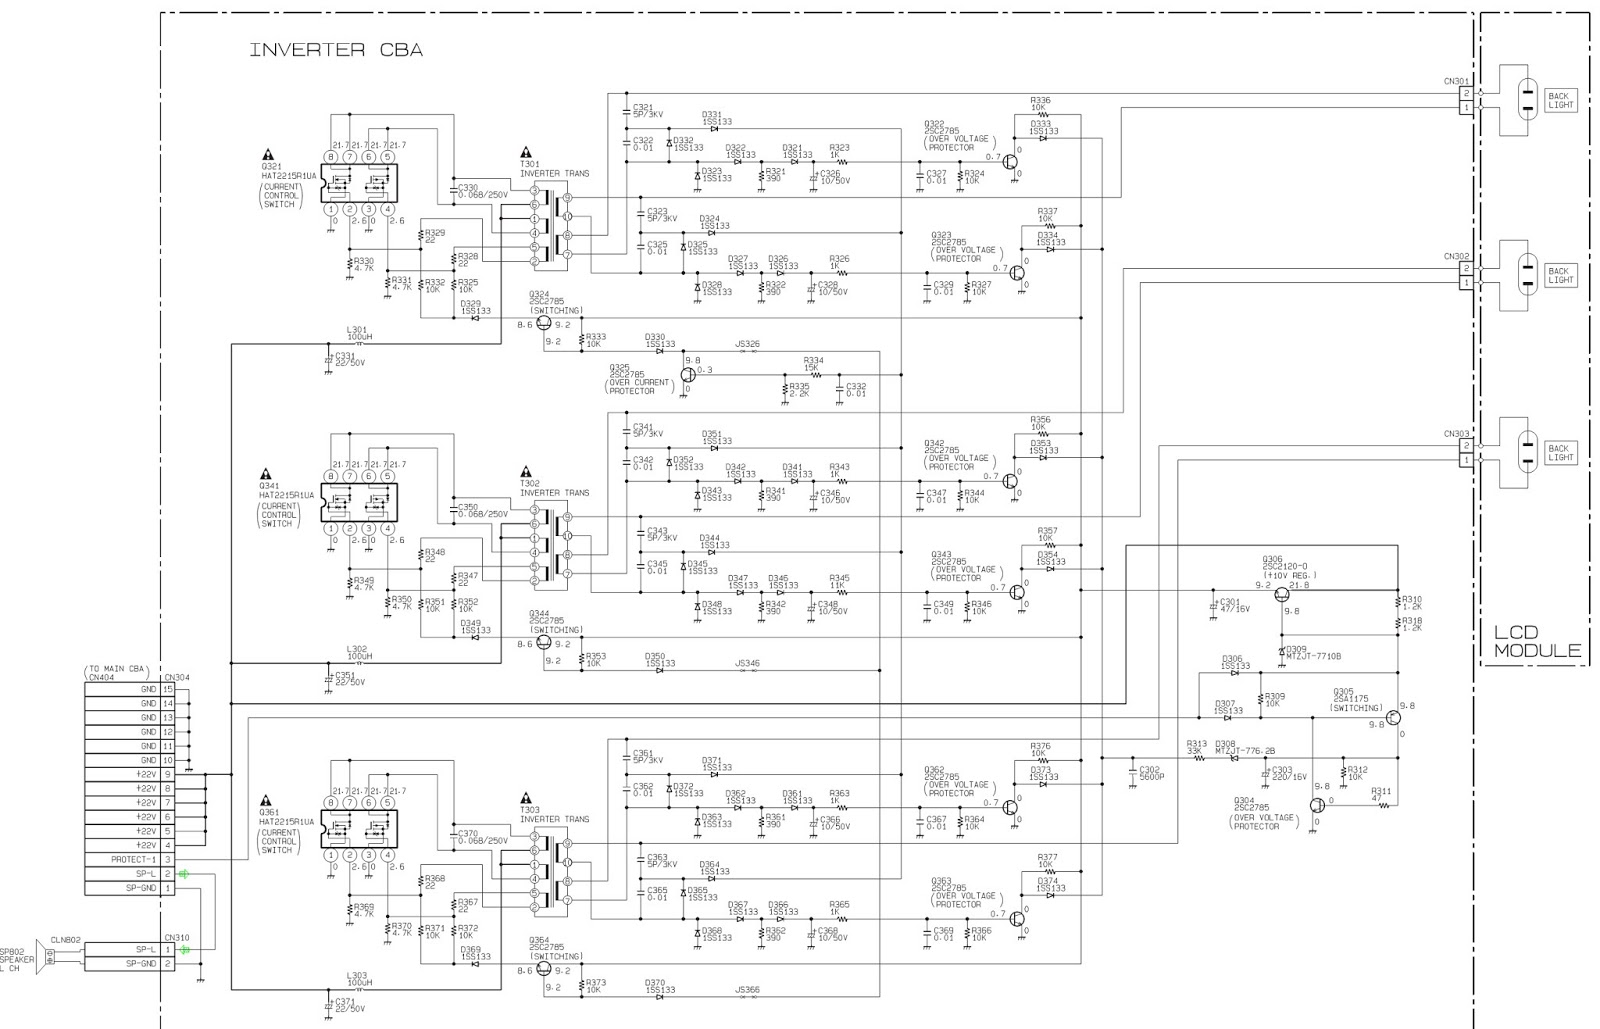 [DIAGRAM] Led Tv Inverter Board Circuit Diagram - MYDIAGRAM.ONLINE